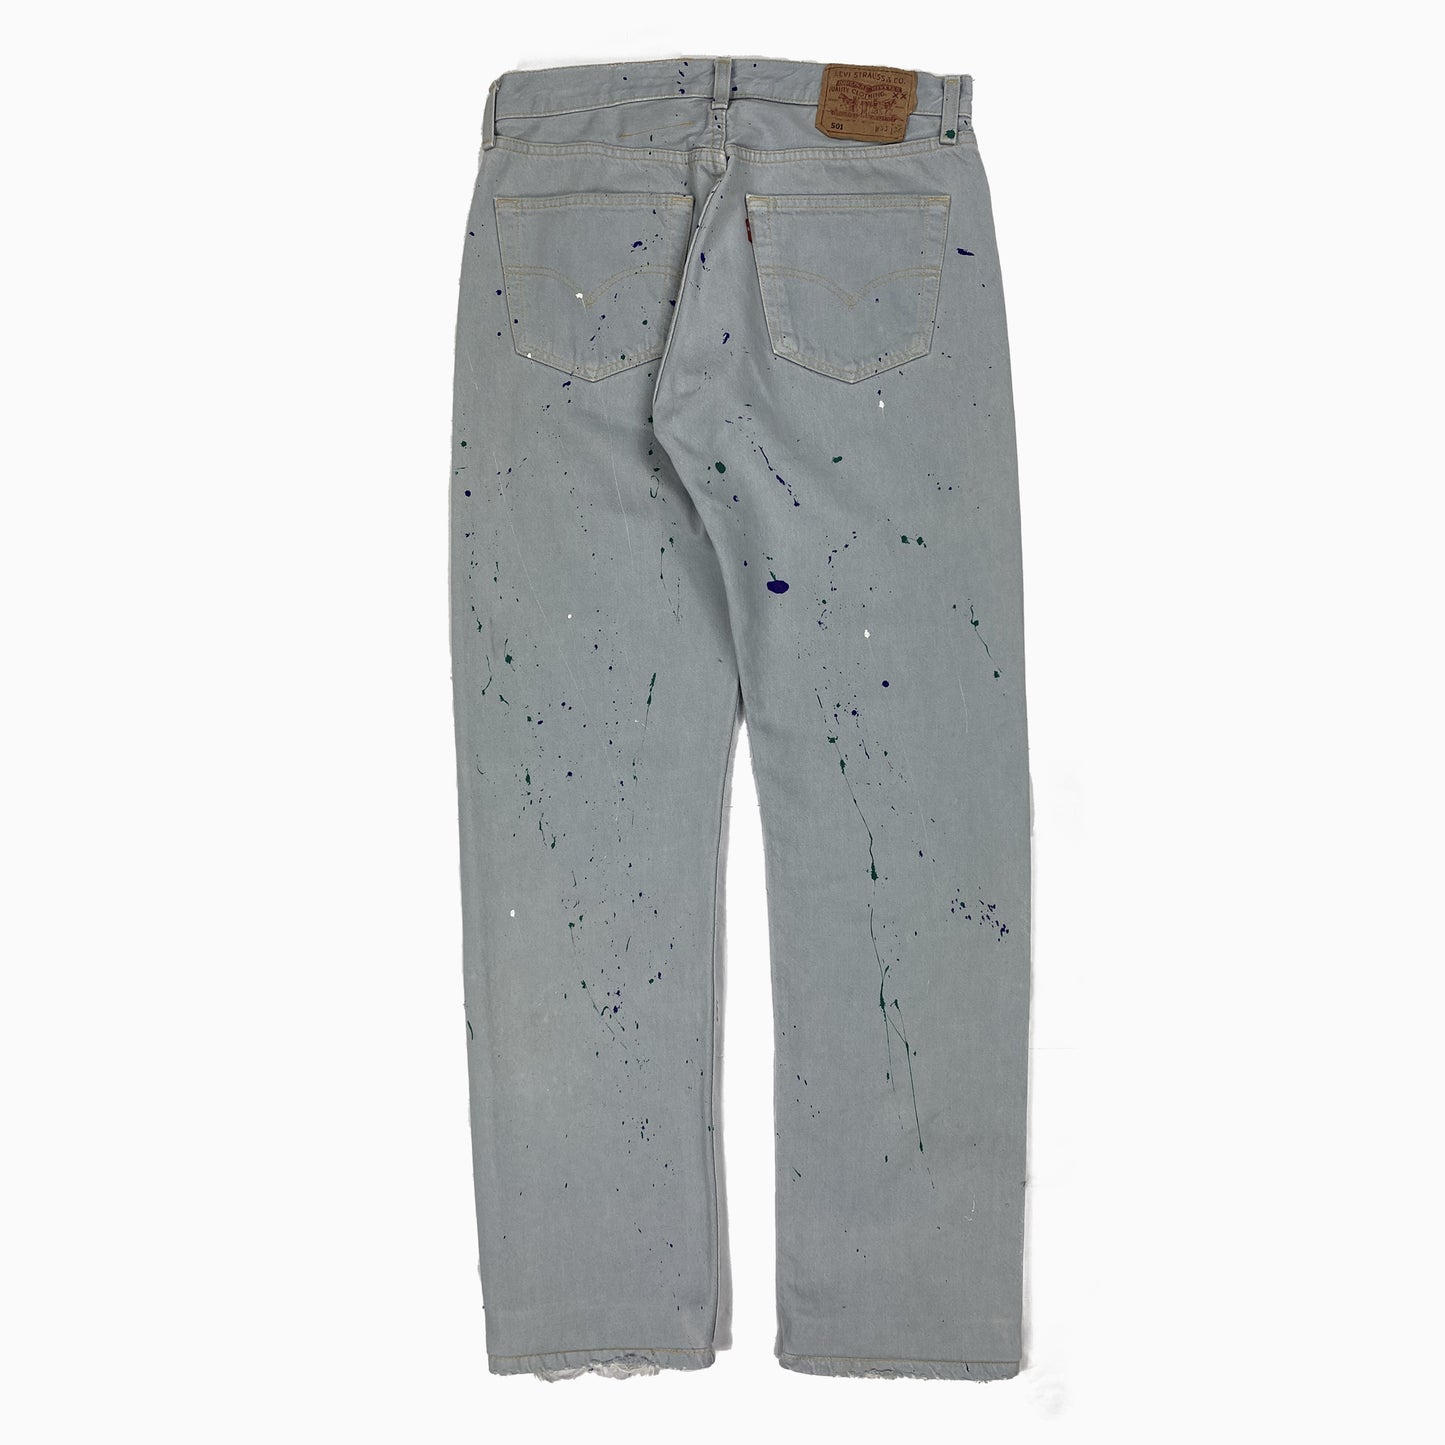 00's Levi's 501 Distressed Jeans (32 x ) – denimfaygo